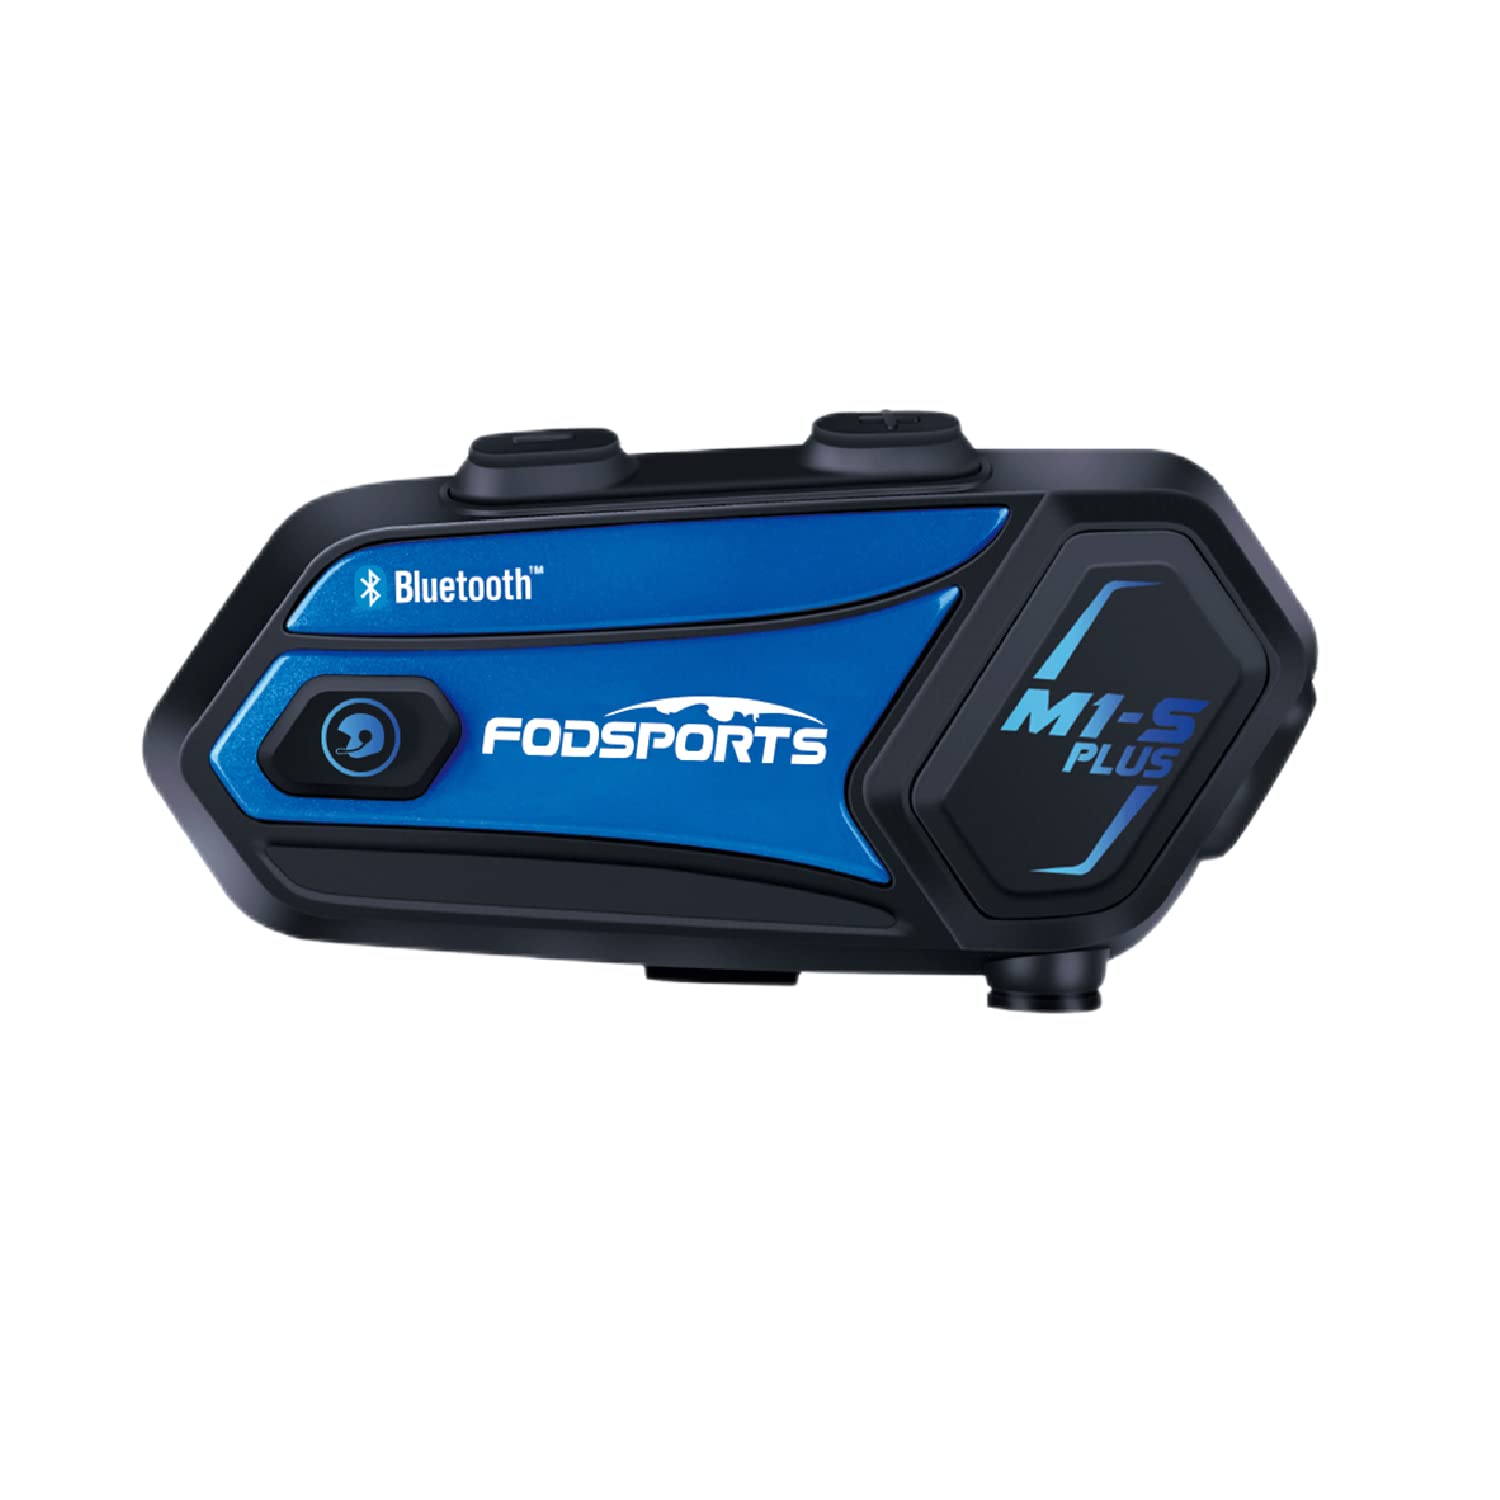 Fodsports M1-S Plus Motorrad Headset Bluetooth,Intercom Motorrad für 8 Motorräder Helm,Motorrad Kommunikationssystem mit 900mAH Batterie GPS MP3 FM Radio Musik teilen Mikrofon stumm(1 Blau)